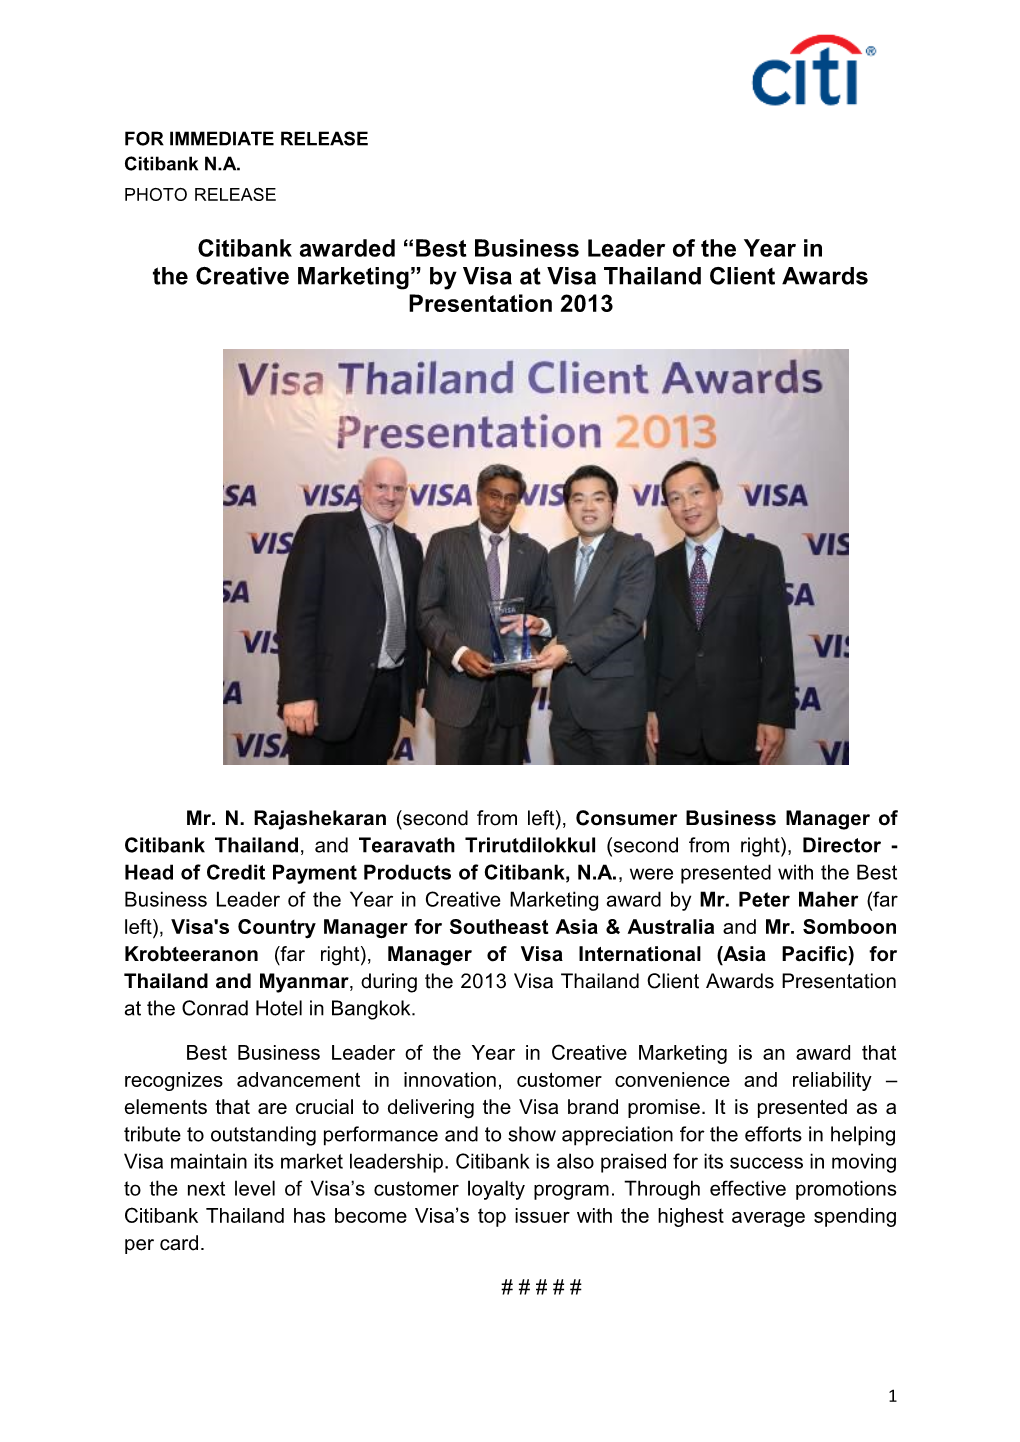 By Visa at Visa Thailand Client Awards Presentation 2013